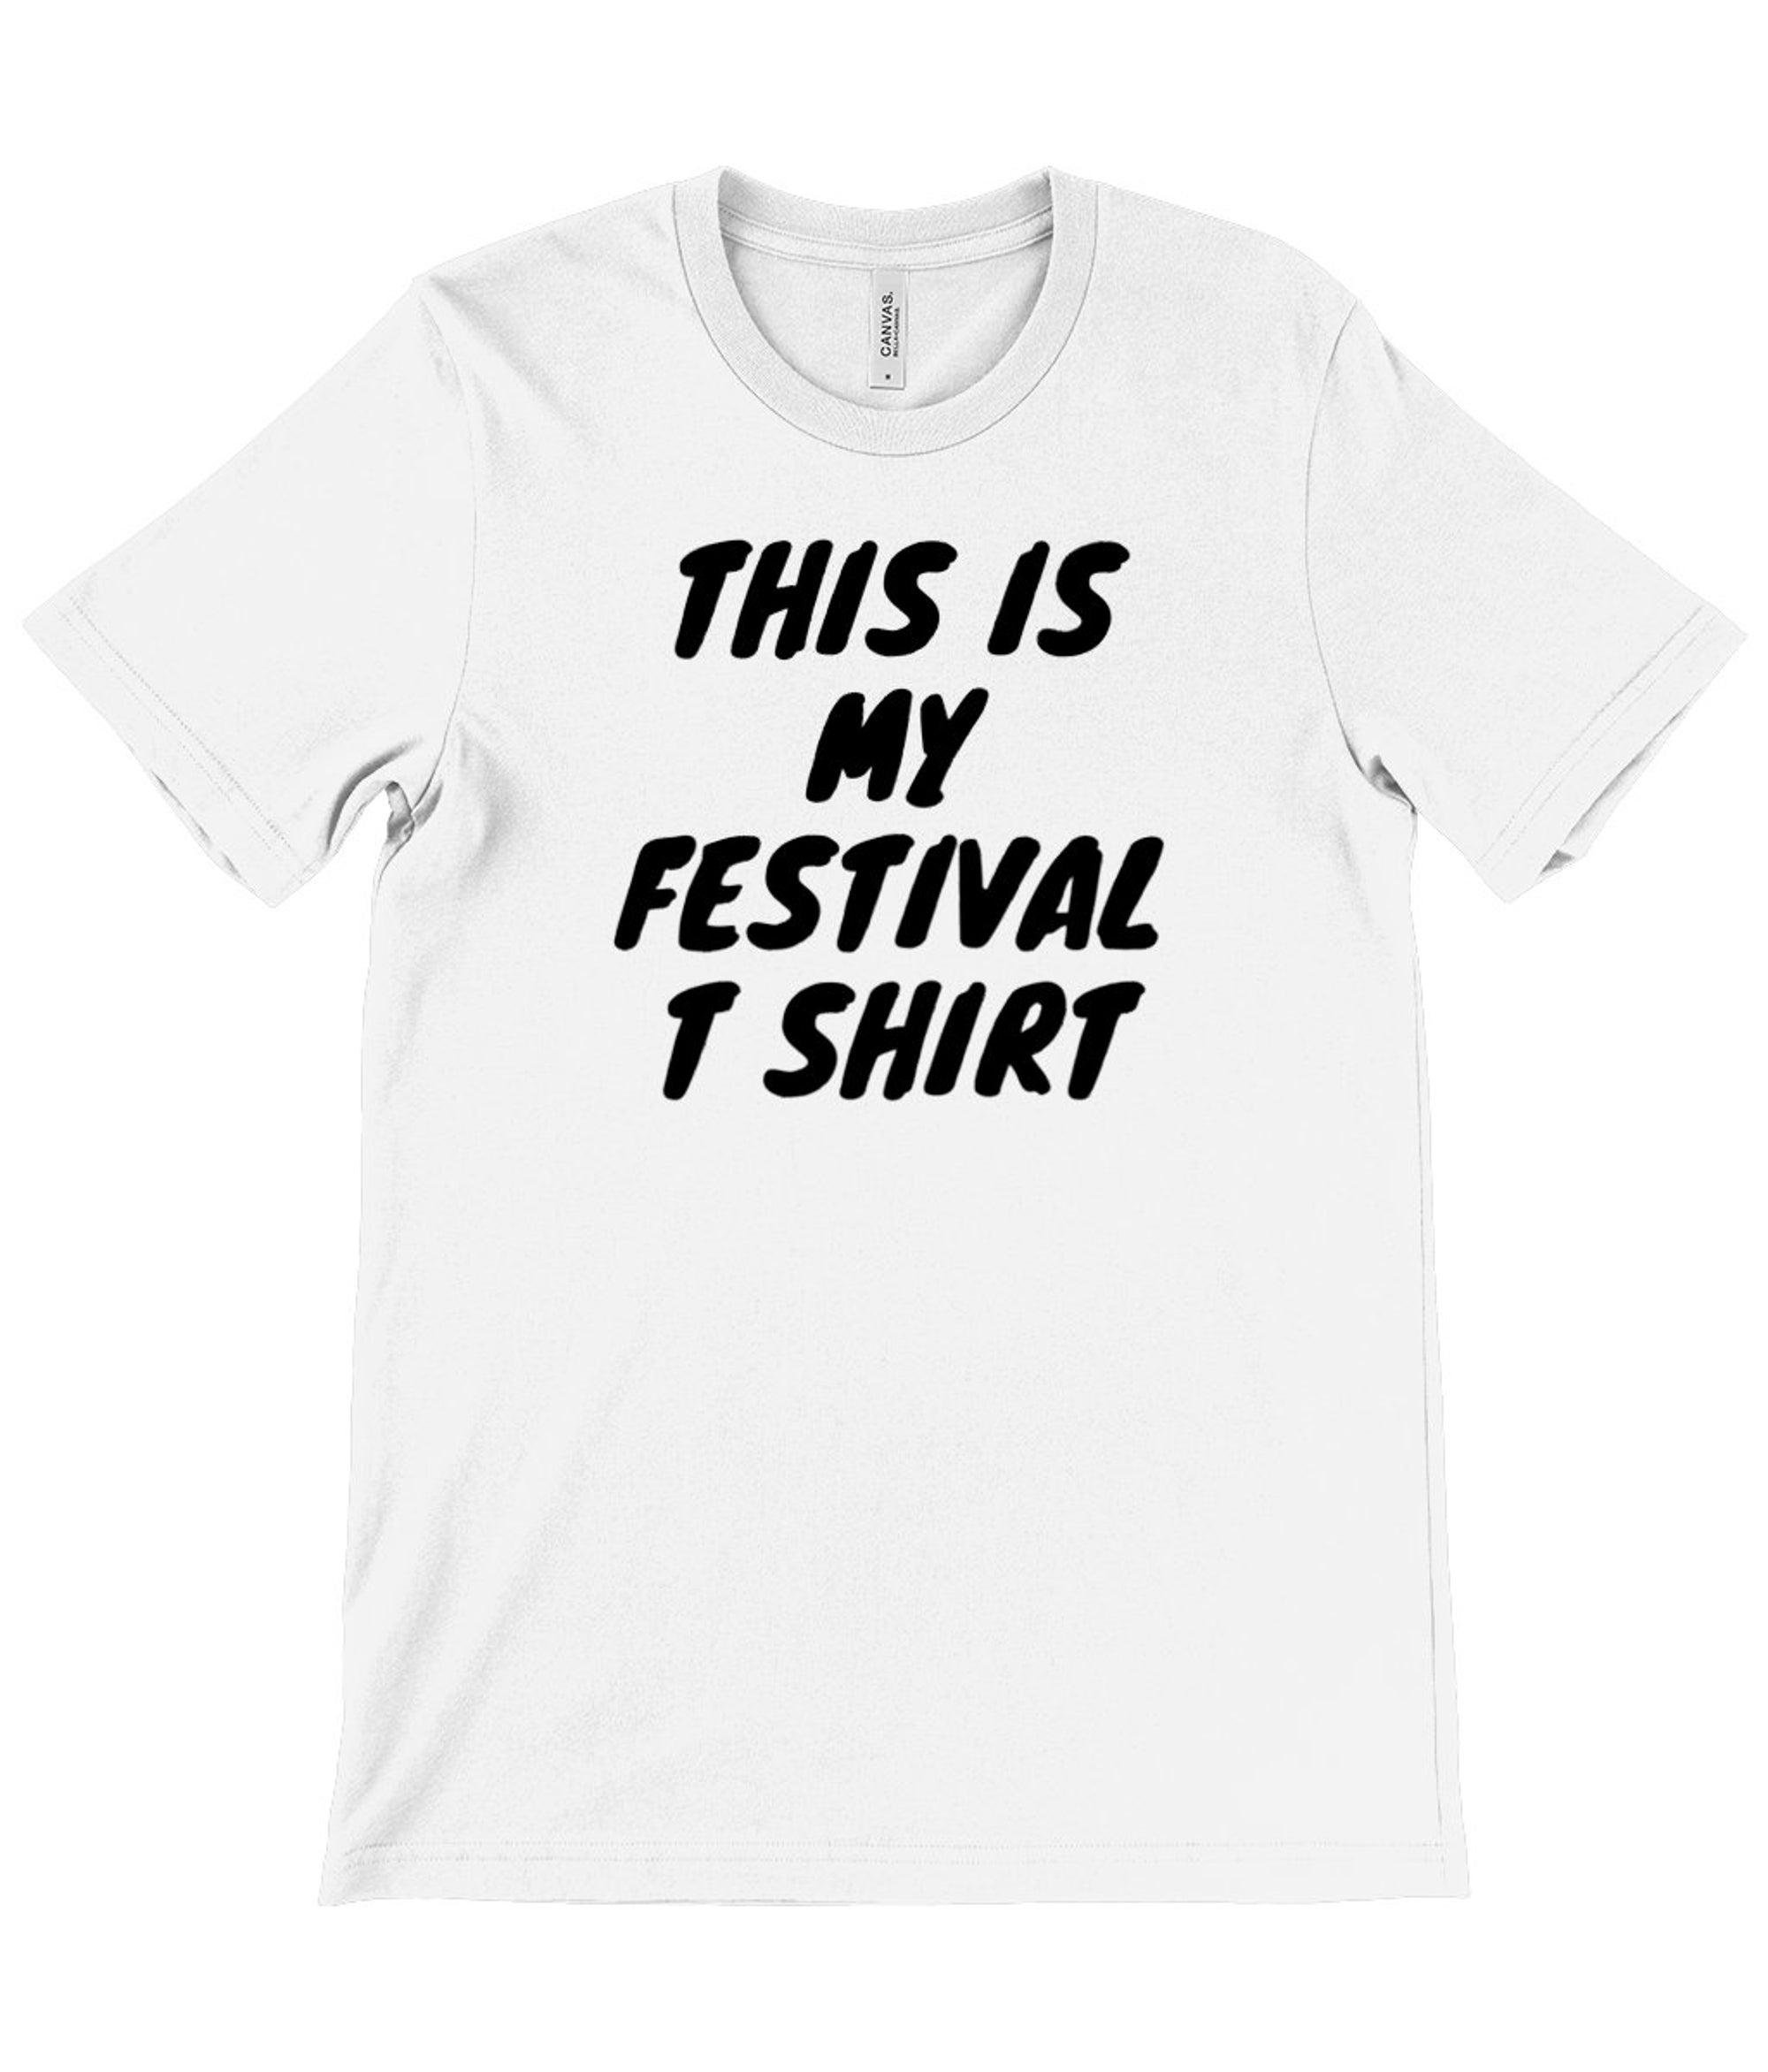 Discover Festival t shirt | music festival t shirt | Funny t shirt